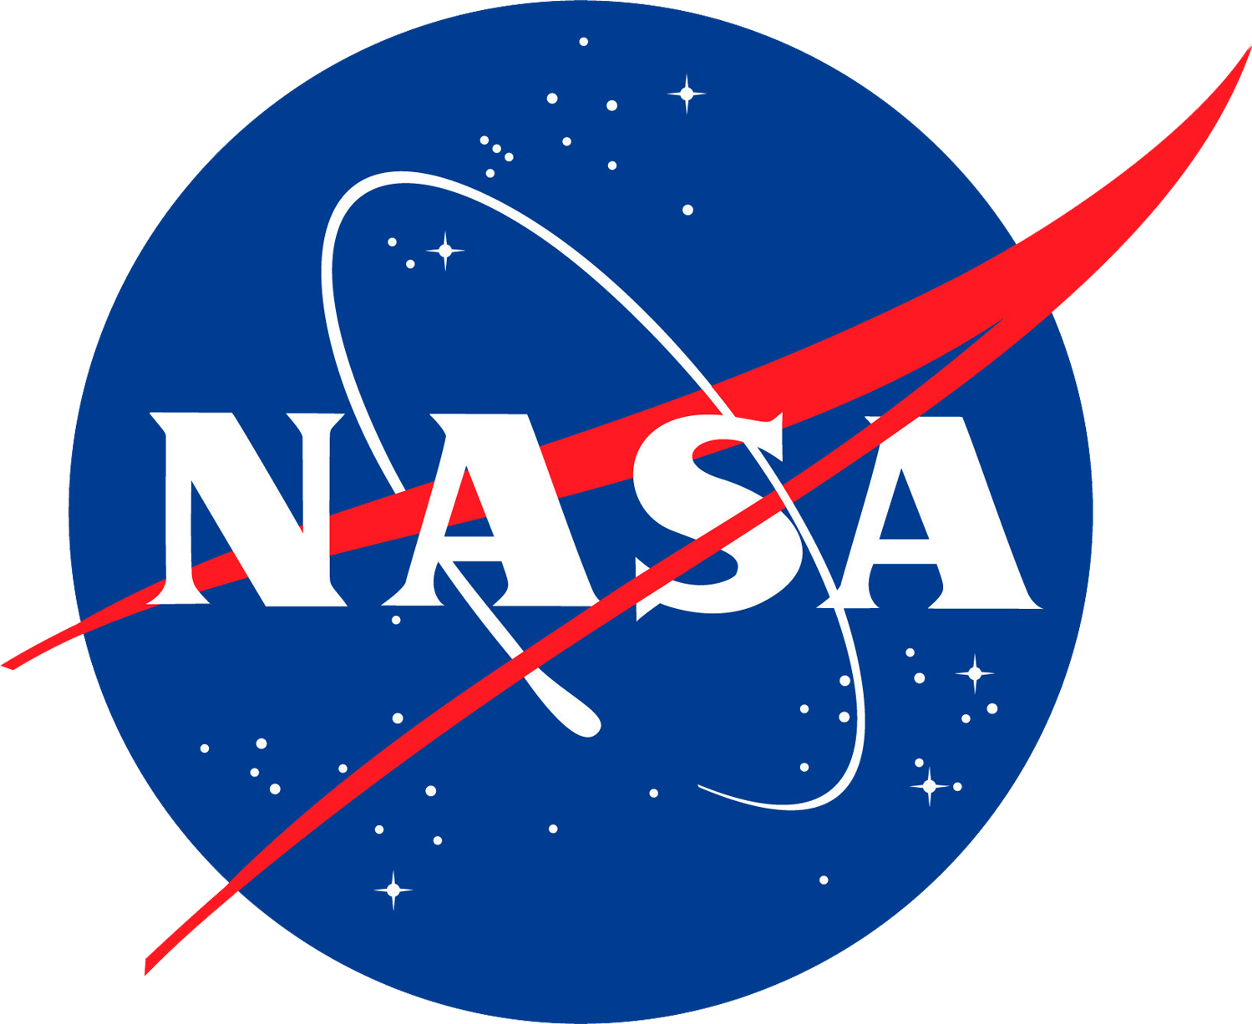 Nasa space planet astronaut. Youtube clipart vaporwave